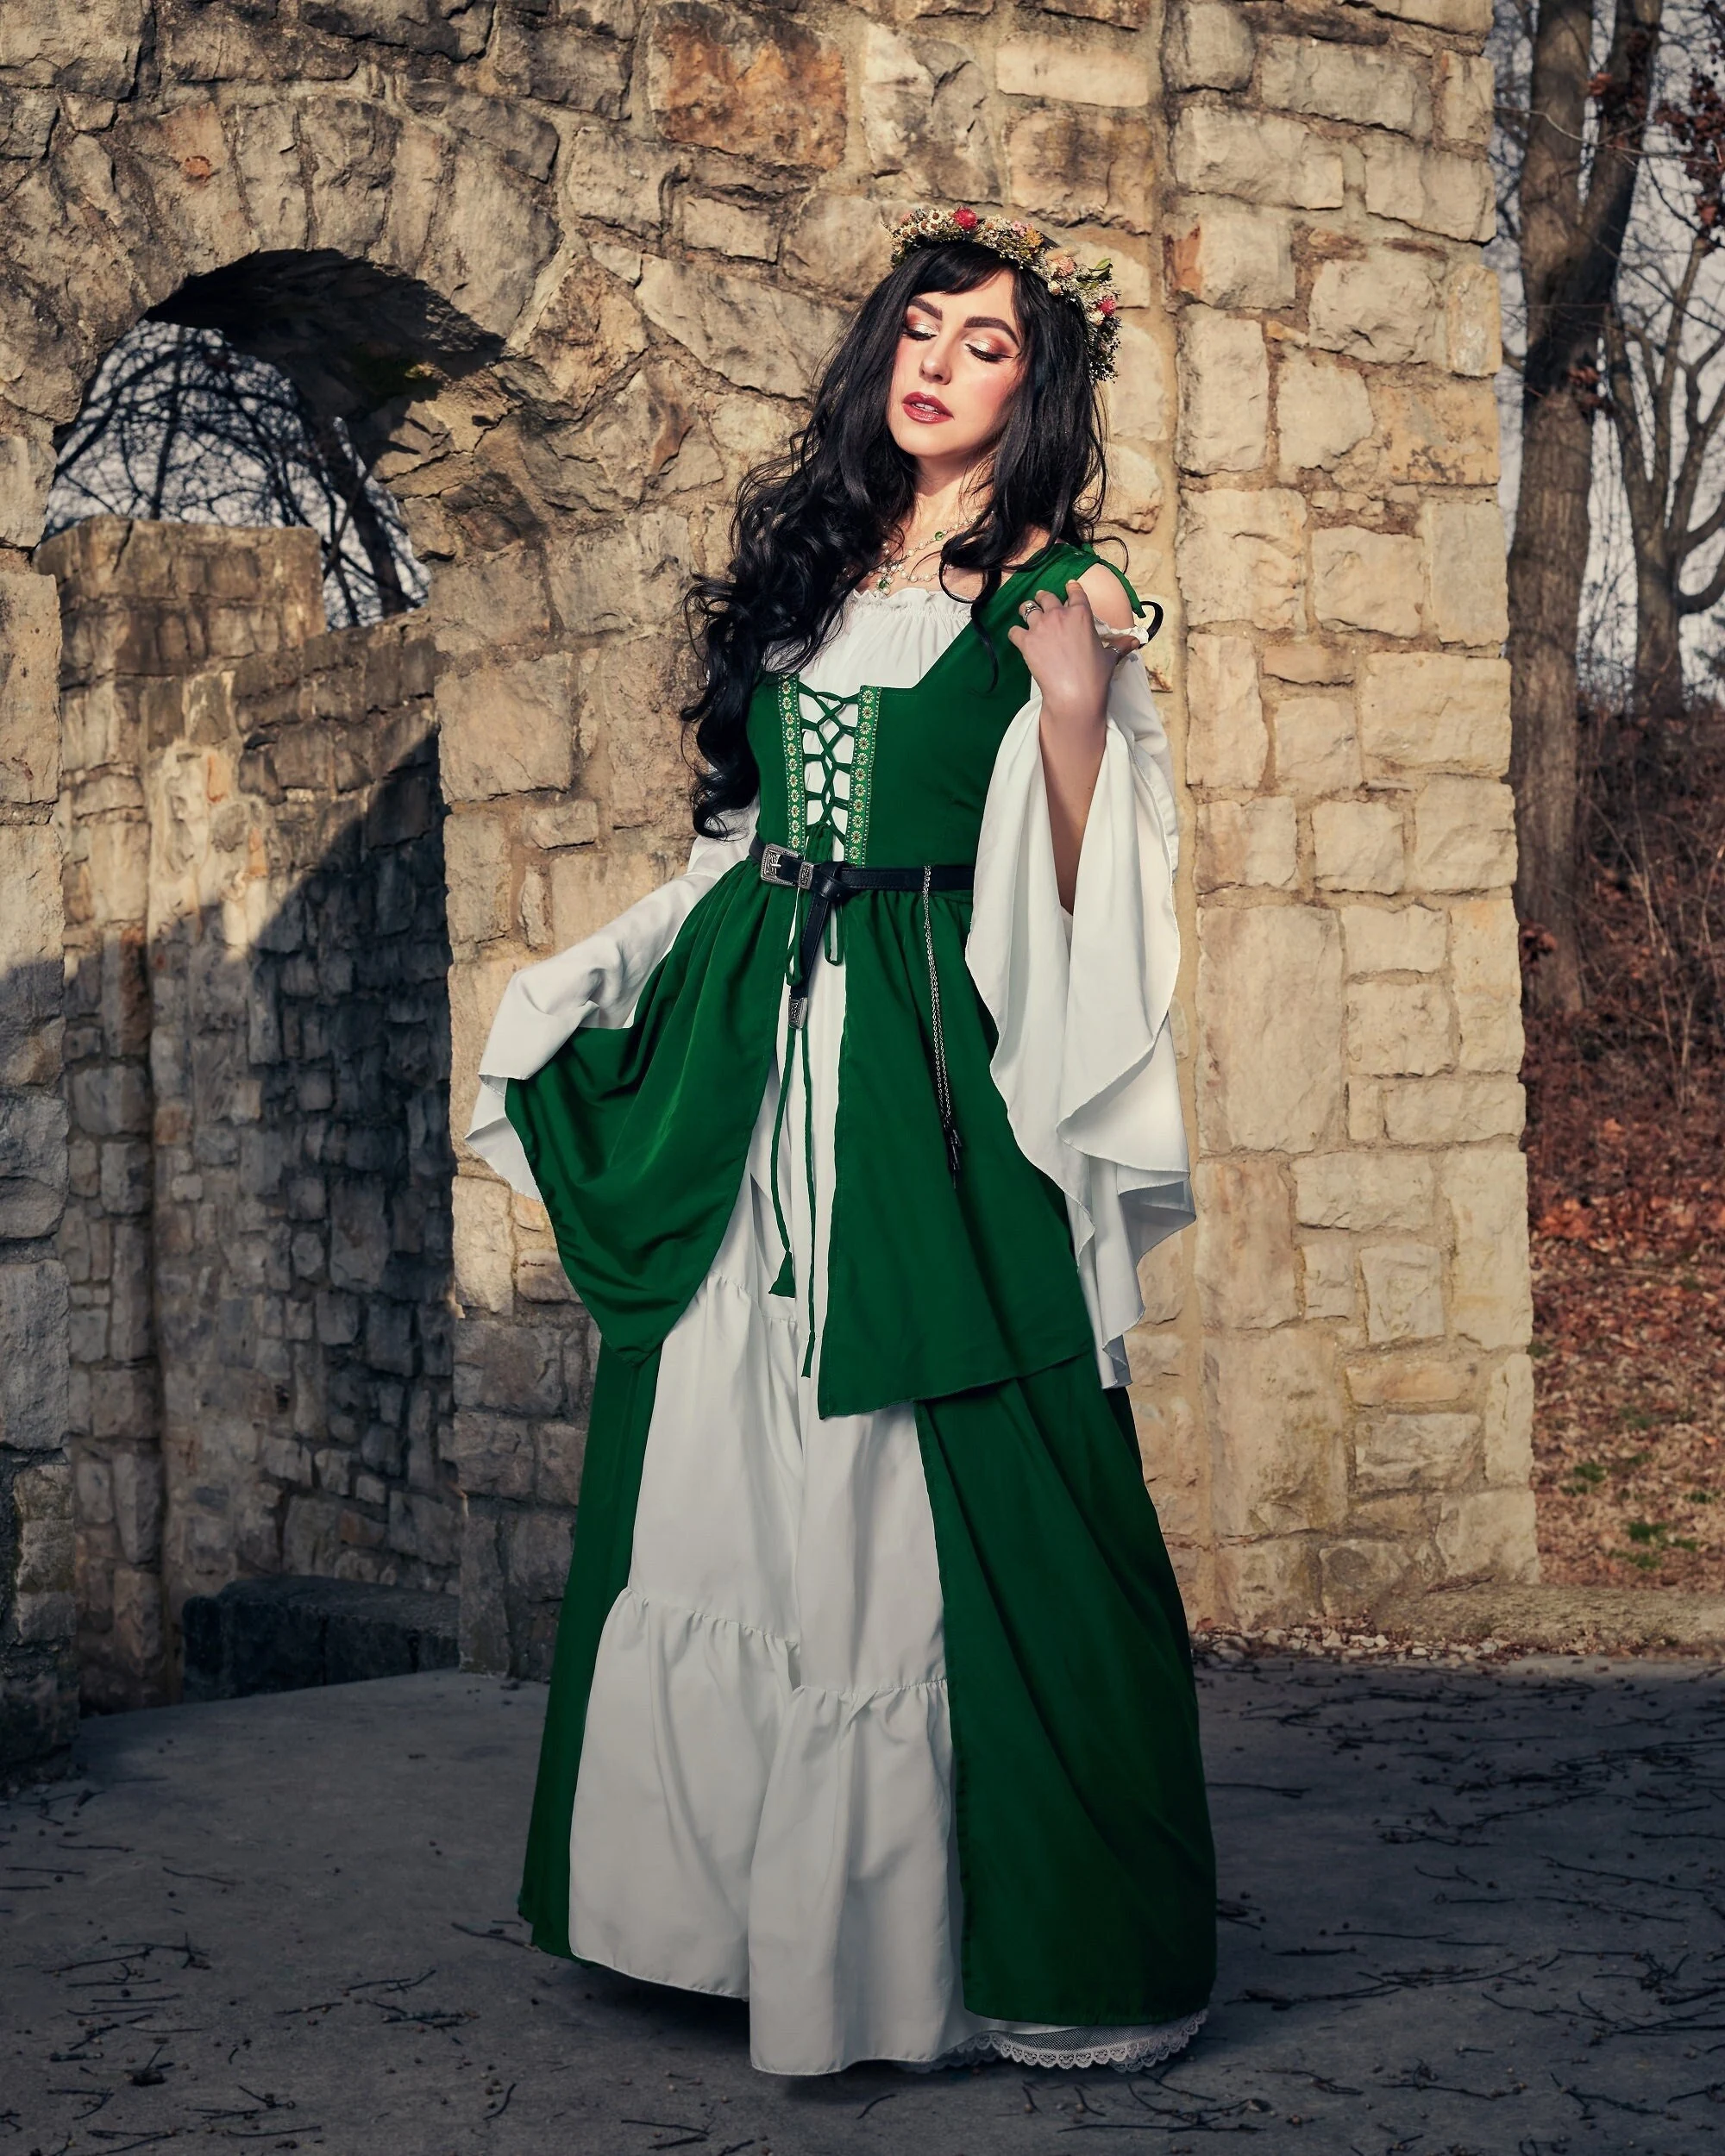 Mythic Layered Medieval Renaissance Faire Costume Set